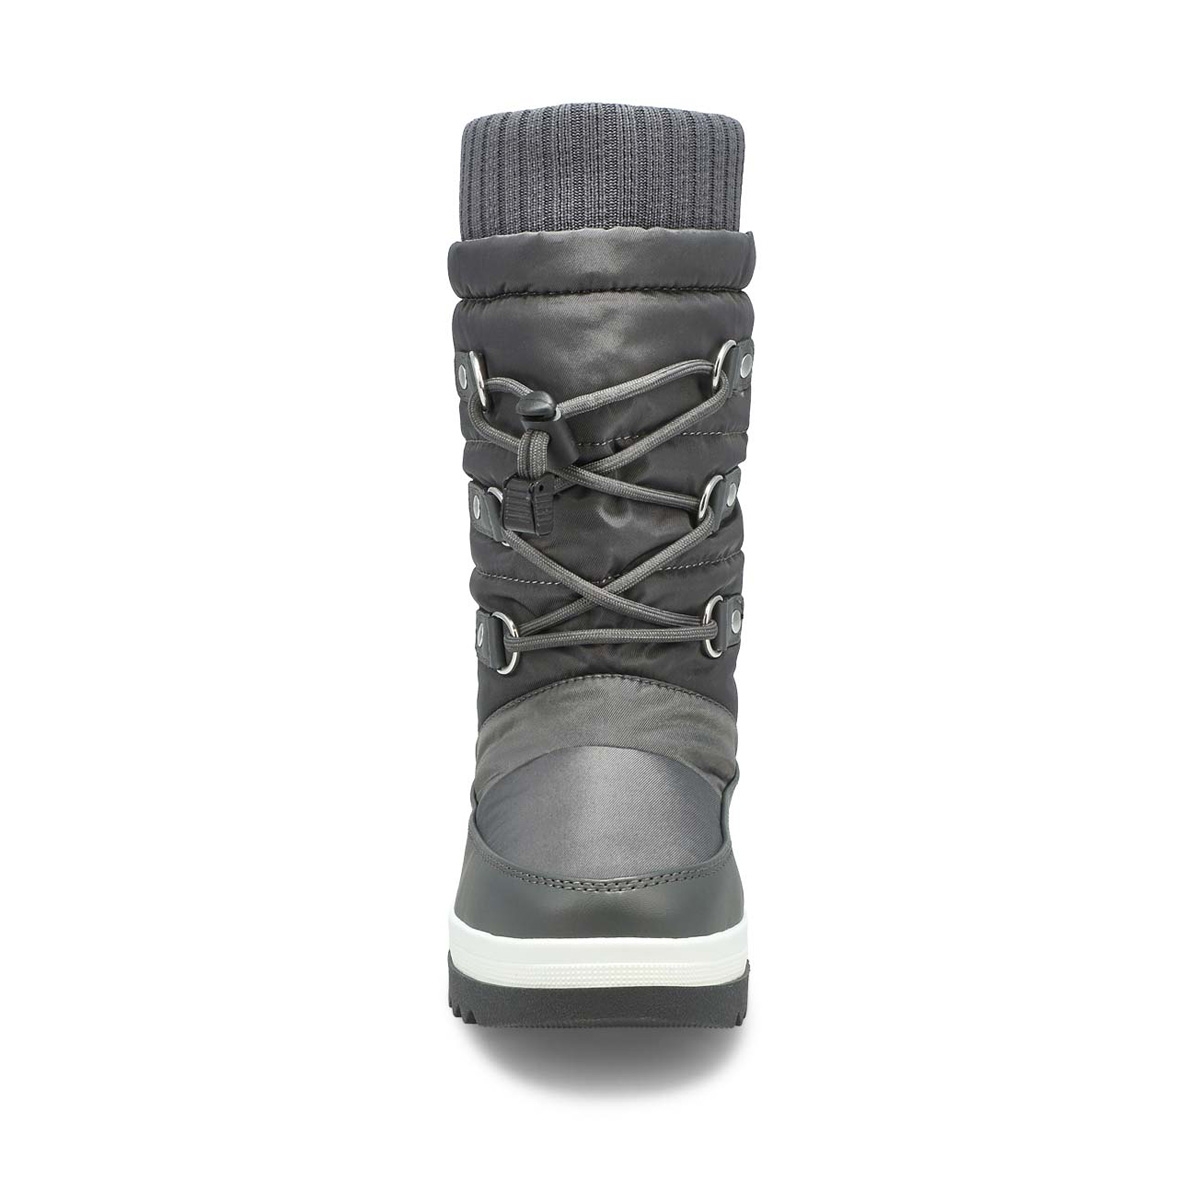 Girls' Moscato Waterproof Winter Boot -Grey